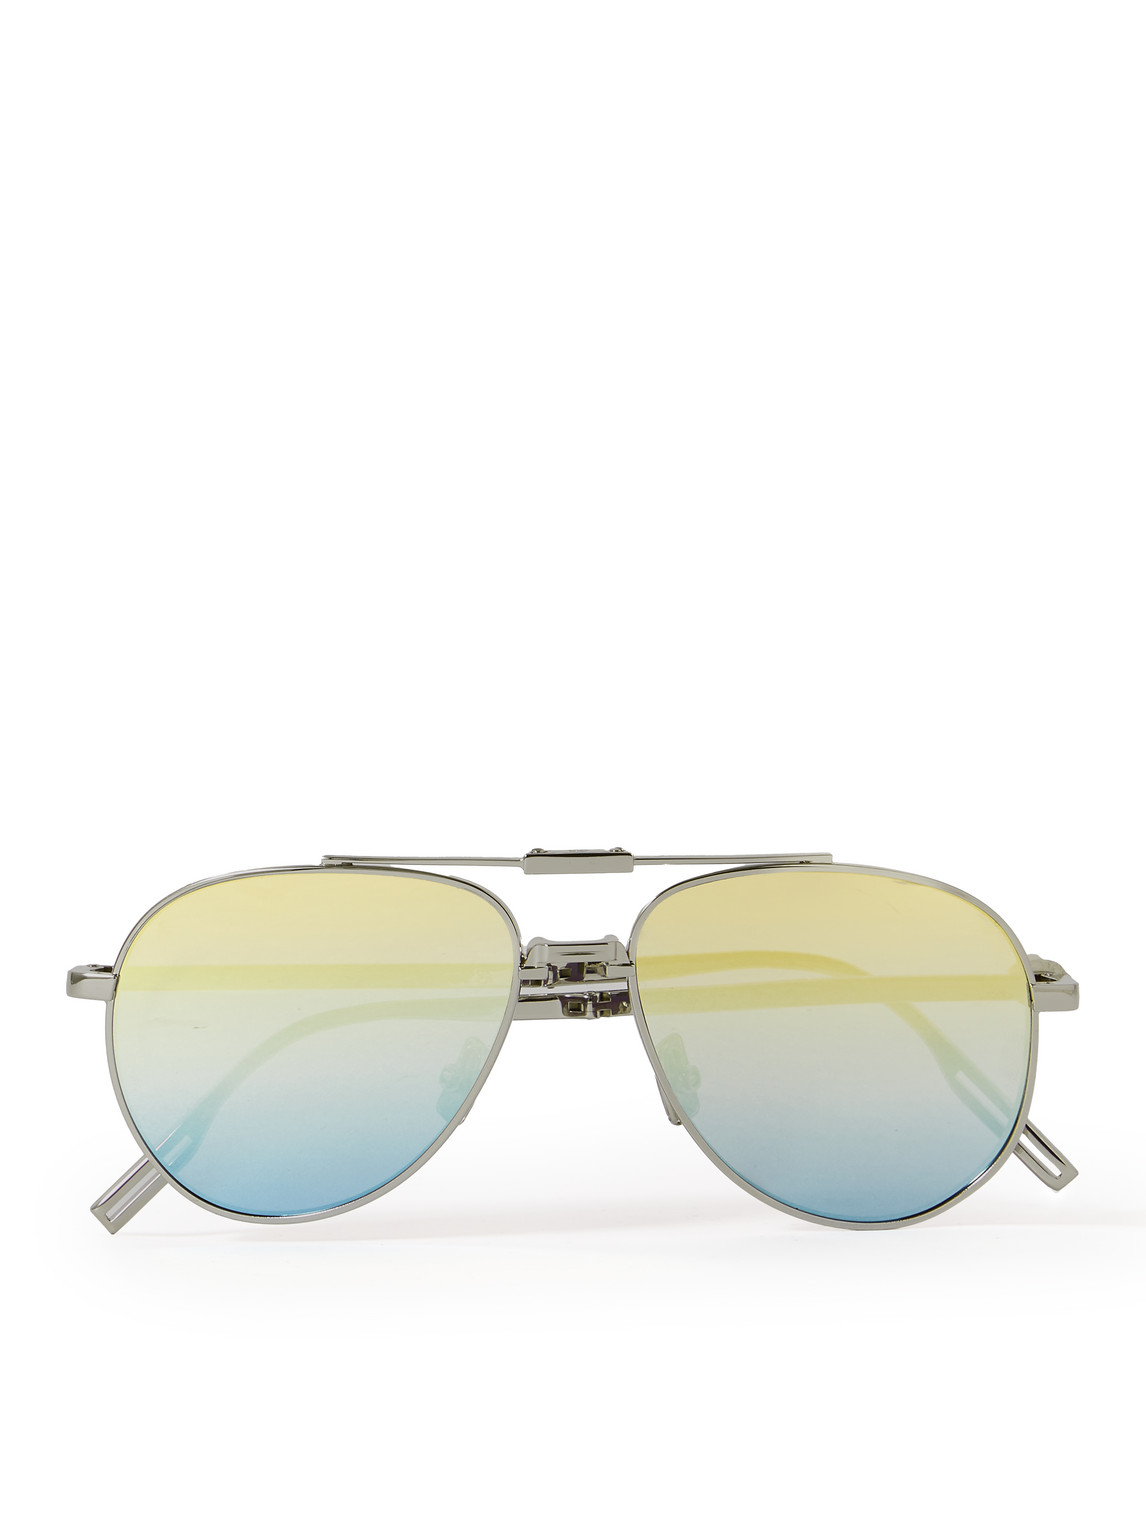 Dior Eyewear - Dior90 A1U Aviator-Style Silver-Tone Sunglasses - Men - Silver von Dior Eyewear